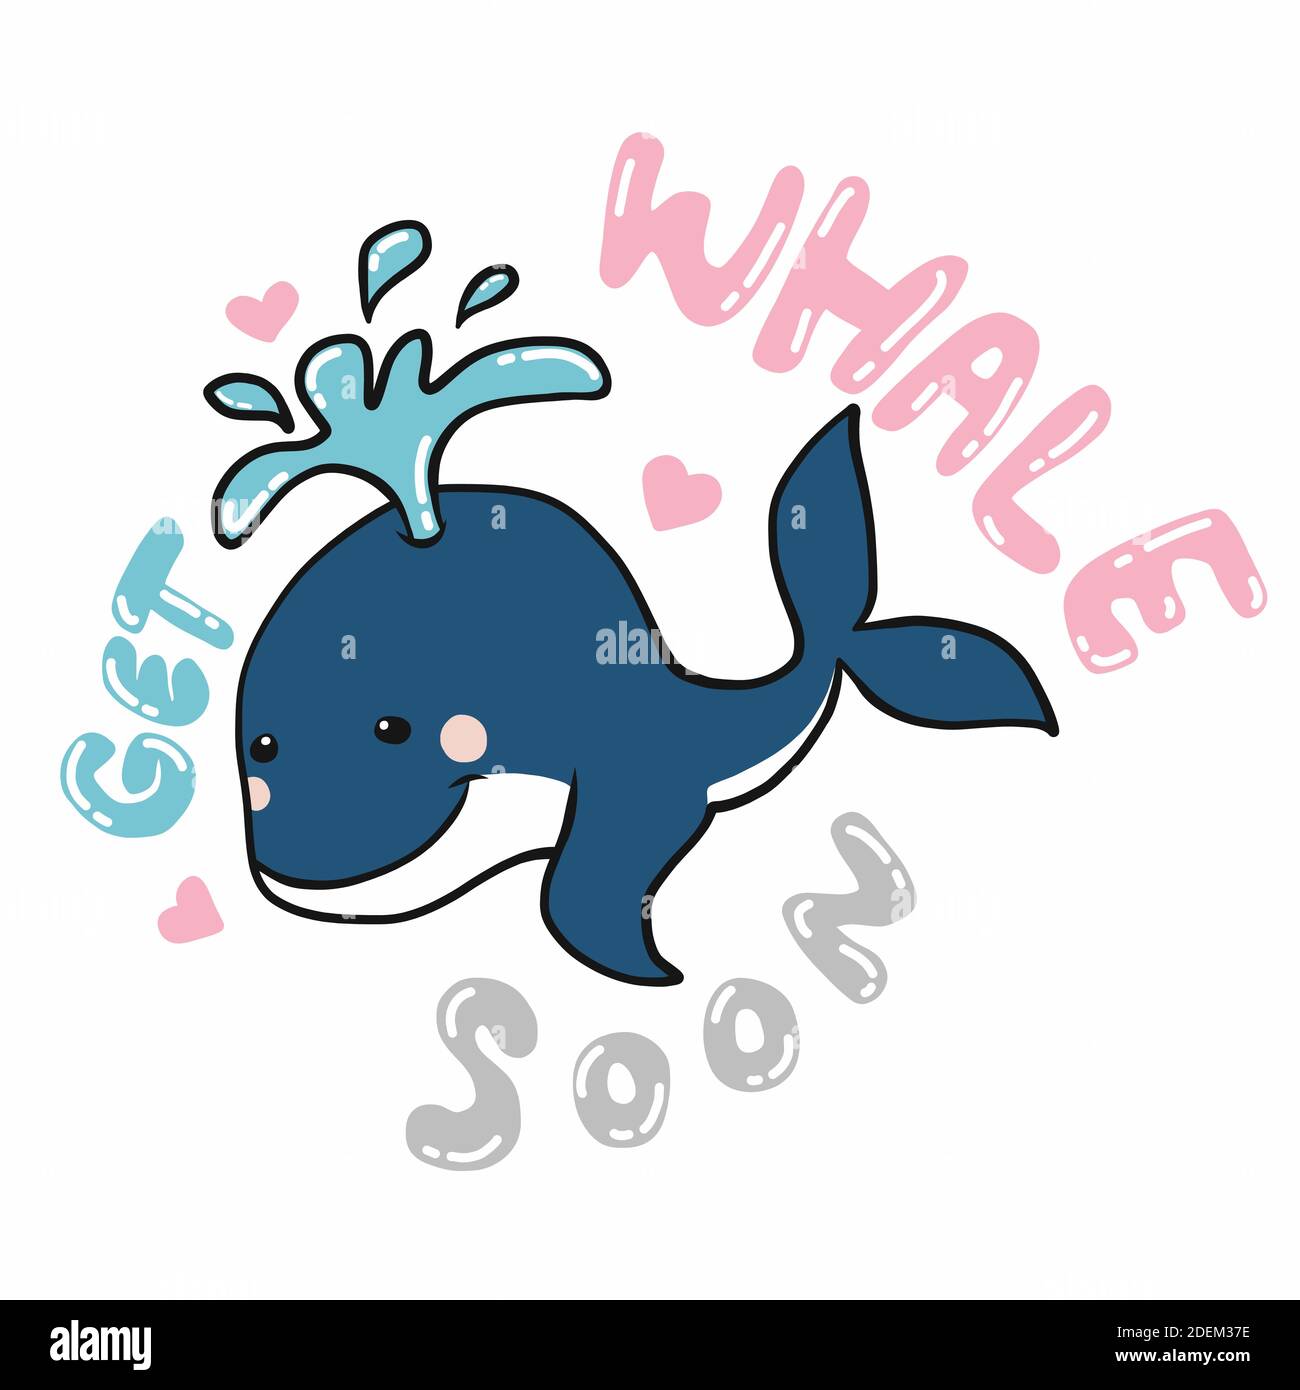 Get whale soon , cute whale cartoon vector illustration Stock Vector